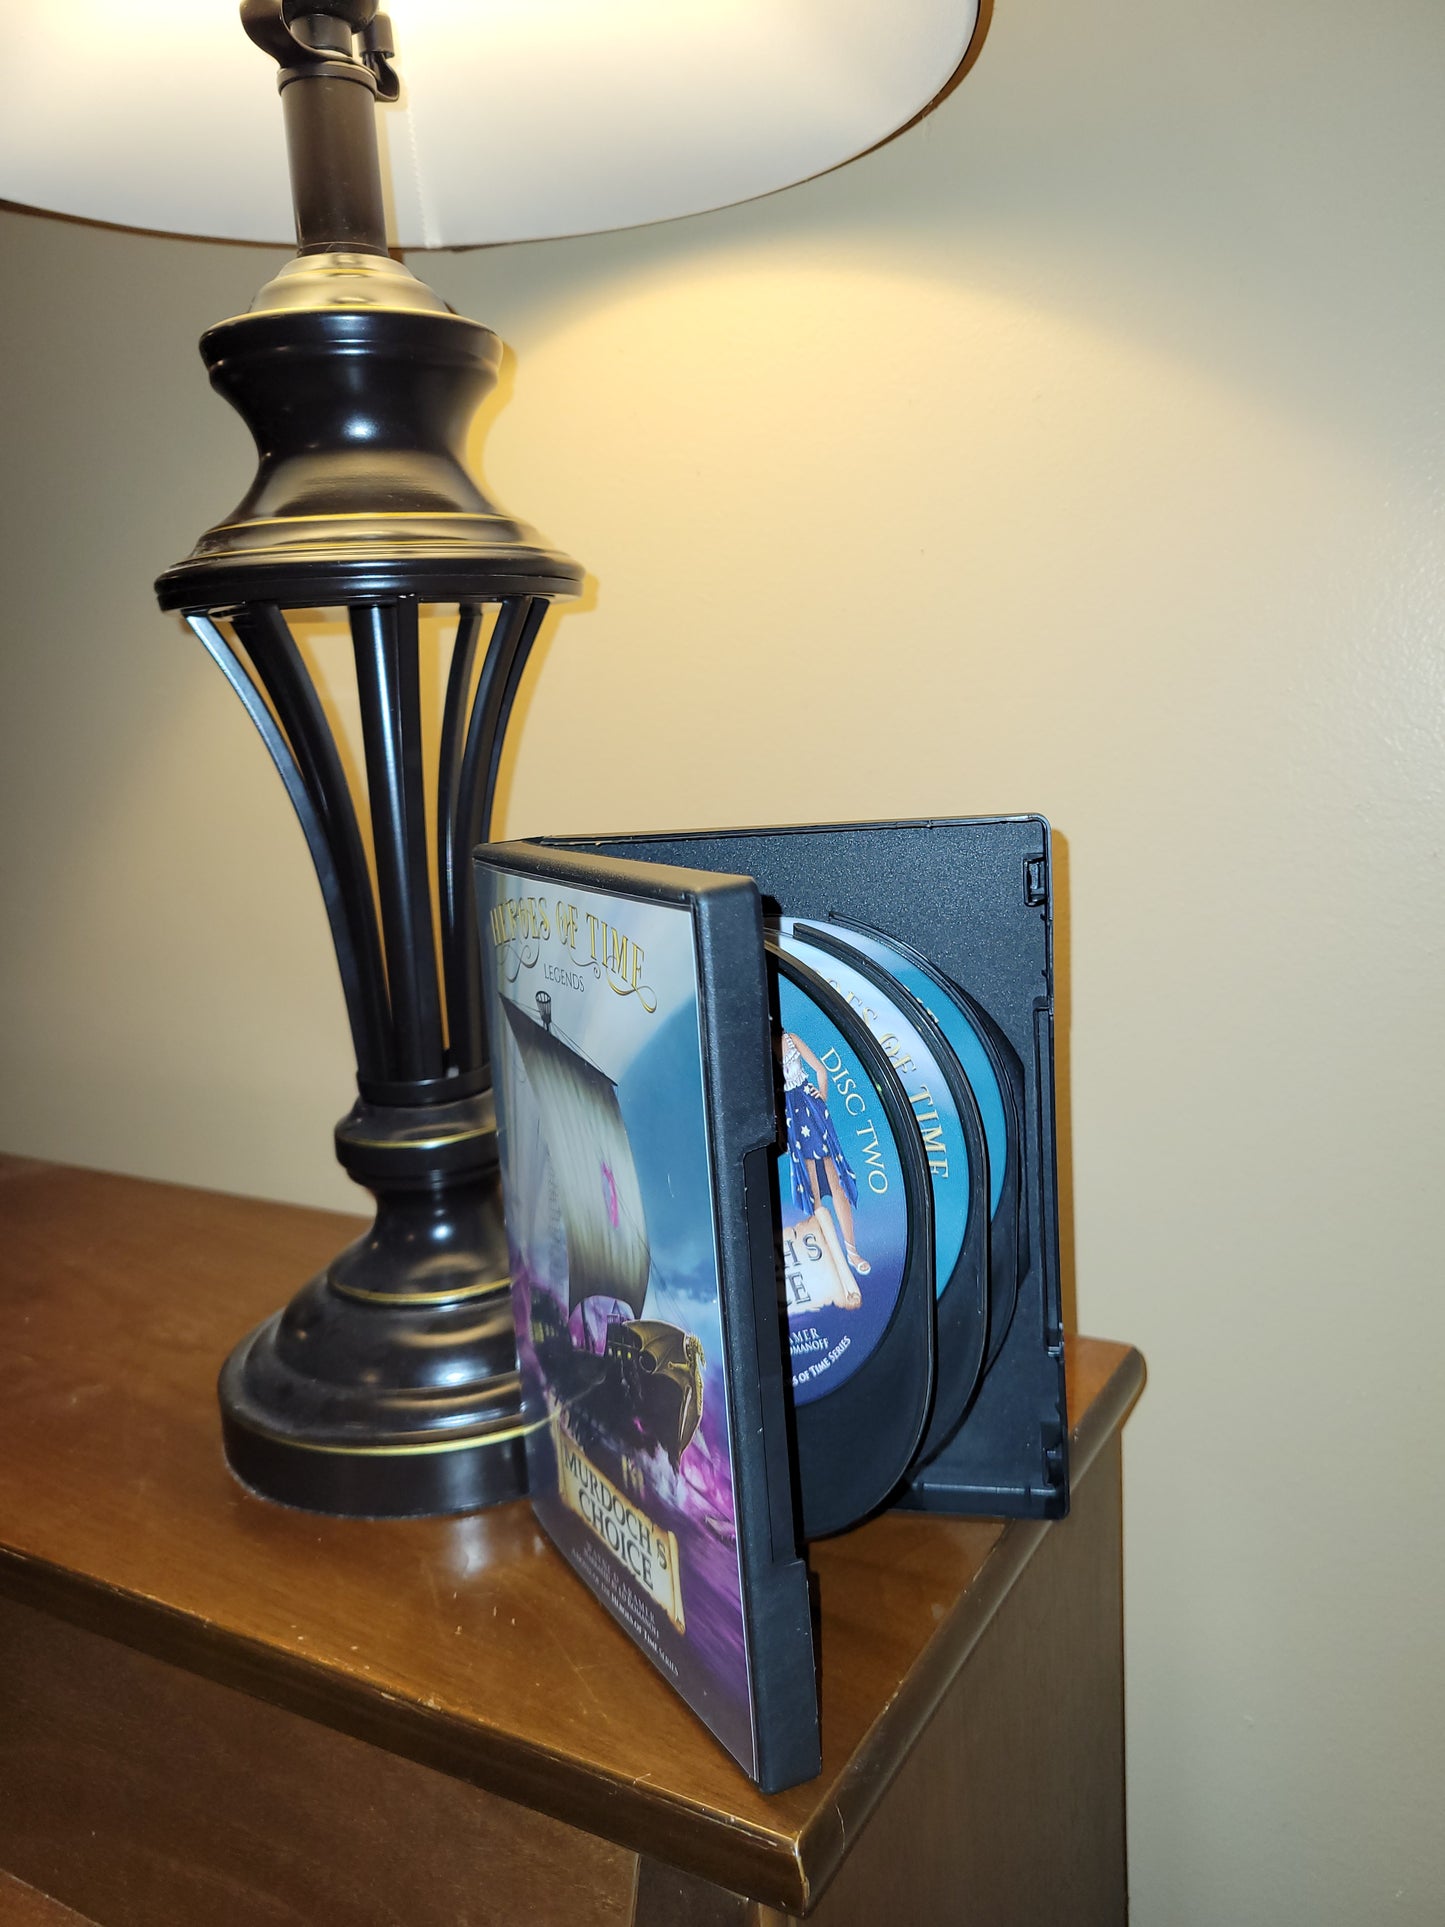 Murdoch's Choice Audiobook CD Deluxe Set standing open on display